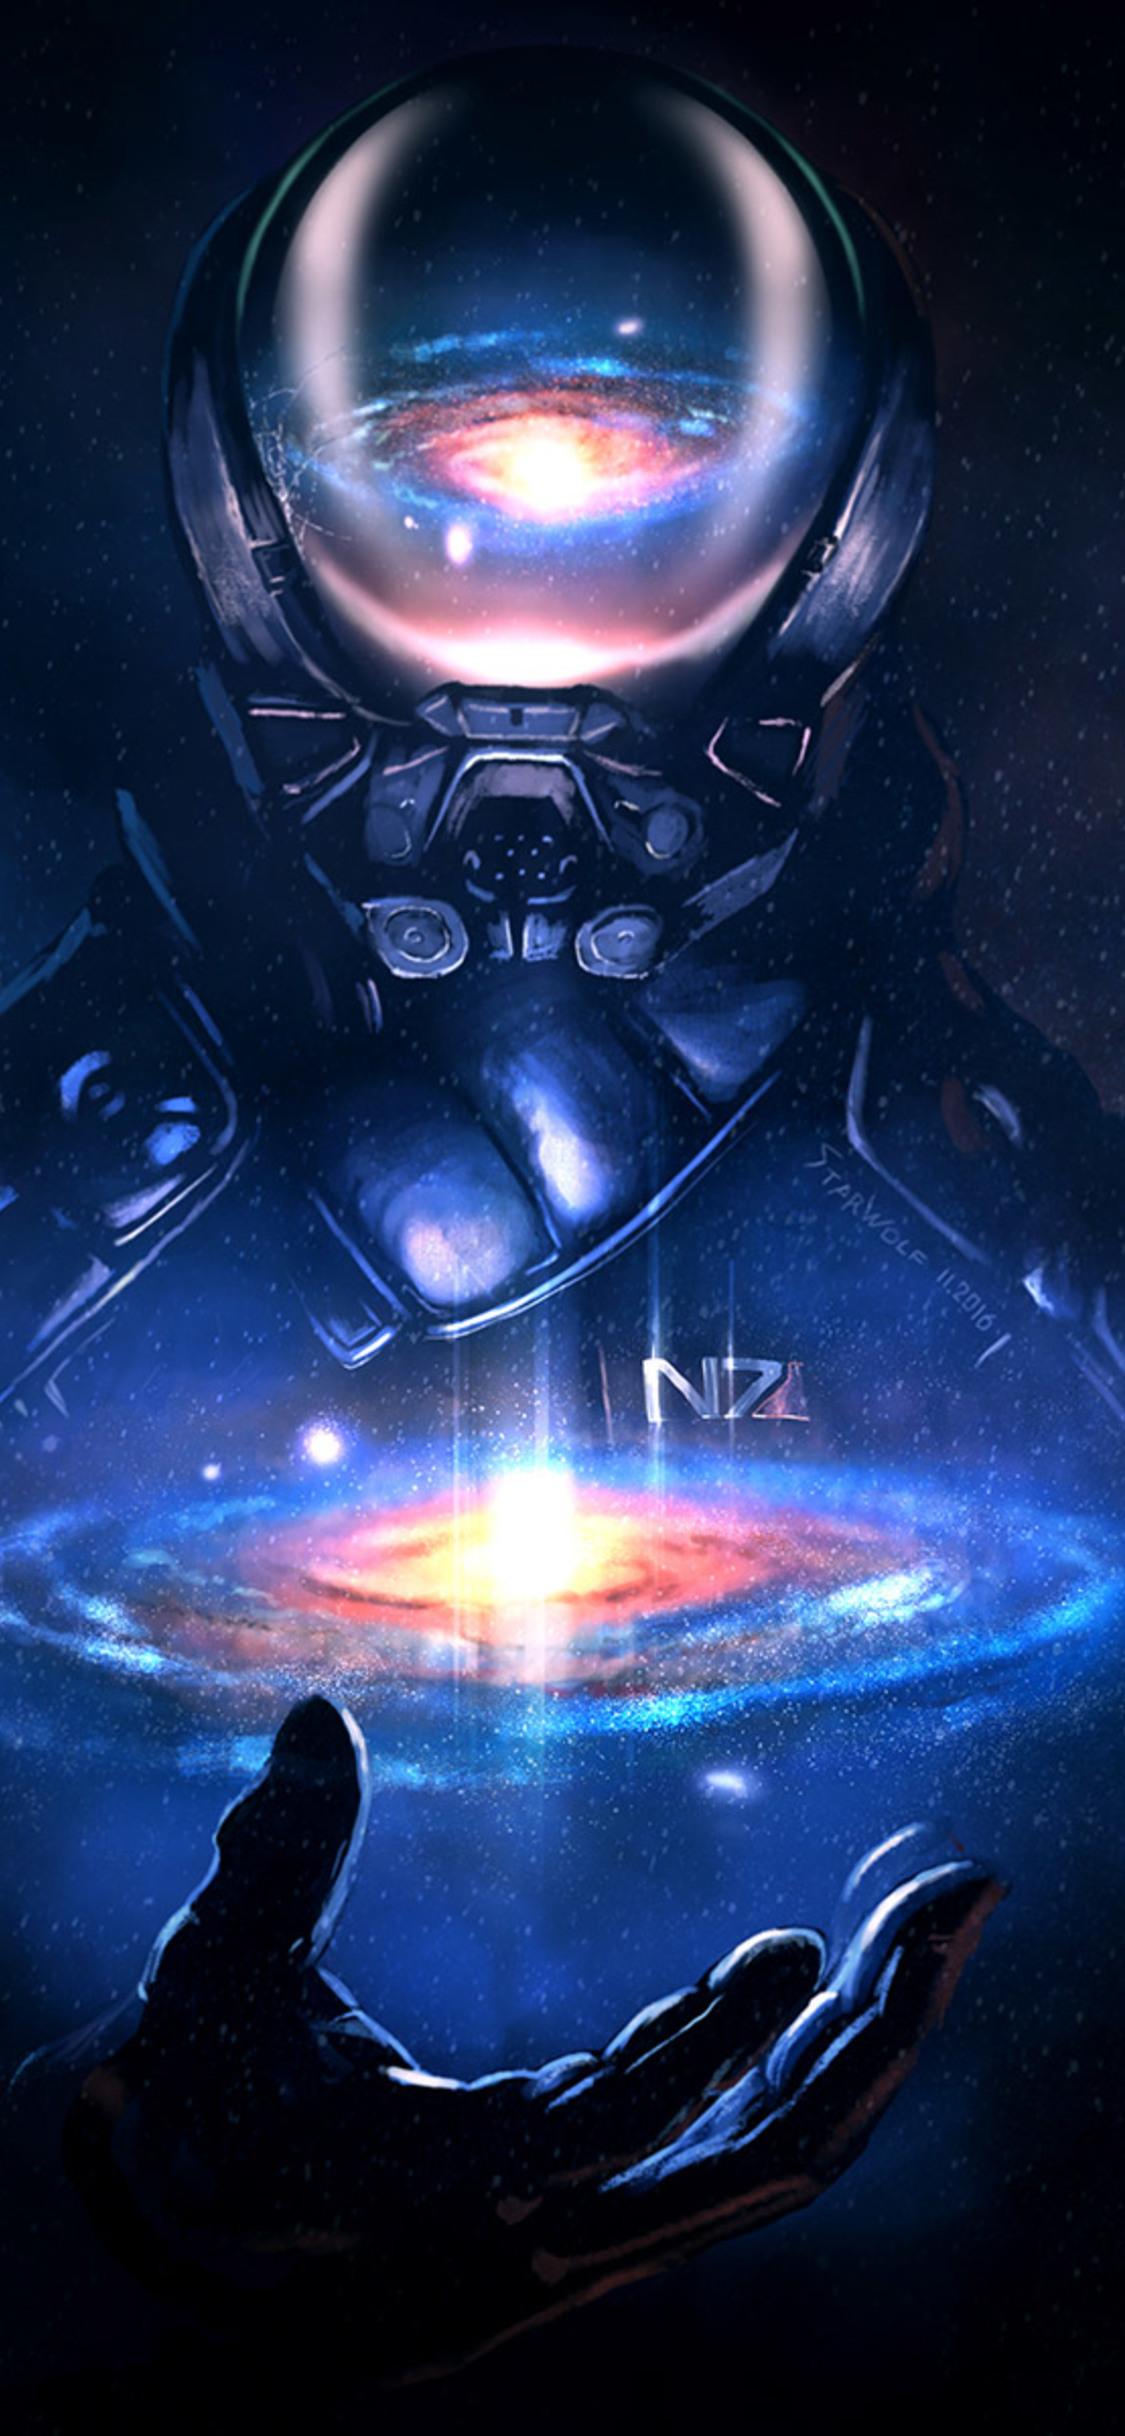 Mass Effect Andromeda Artwork iPhone XS, iPhone 10